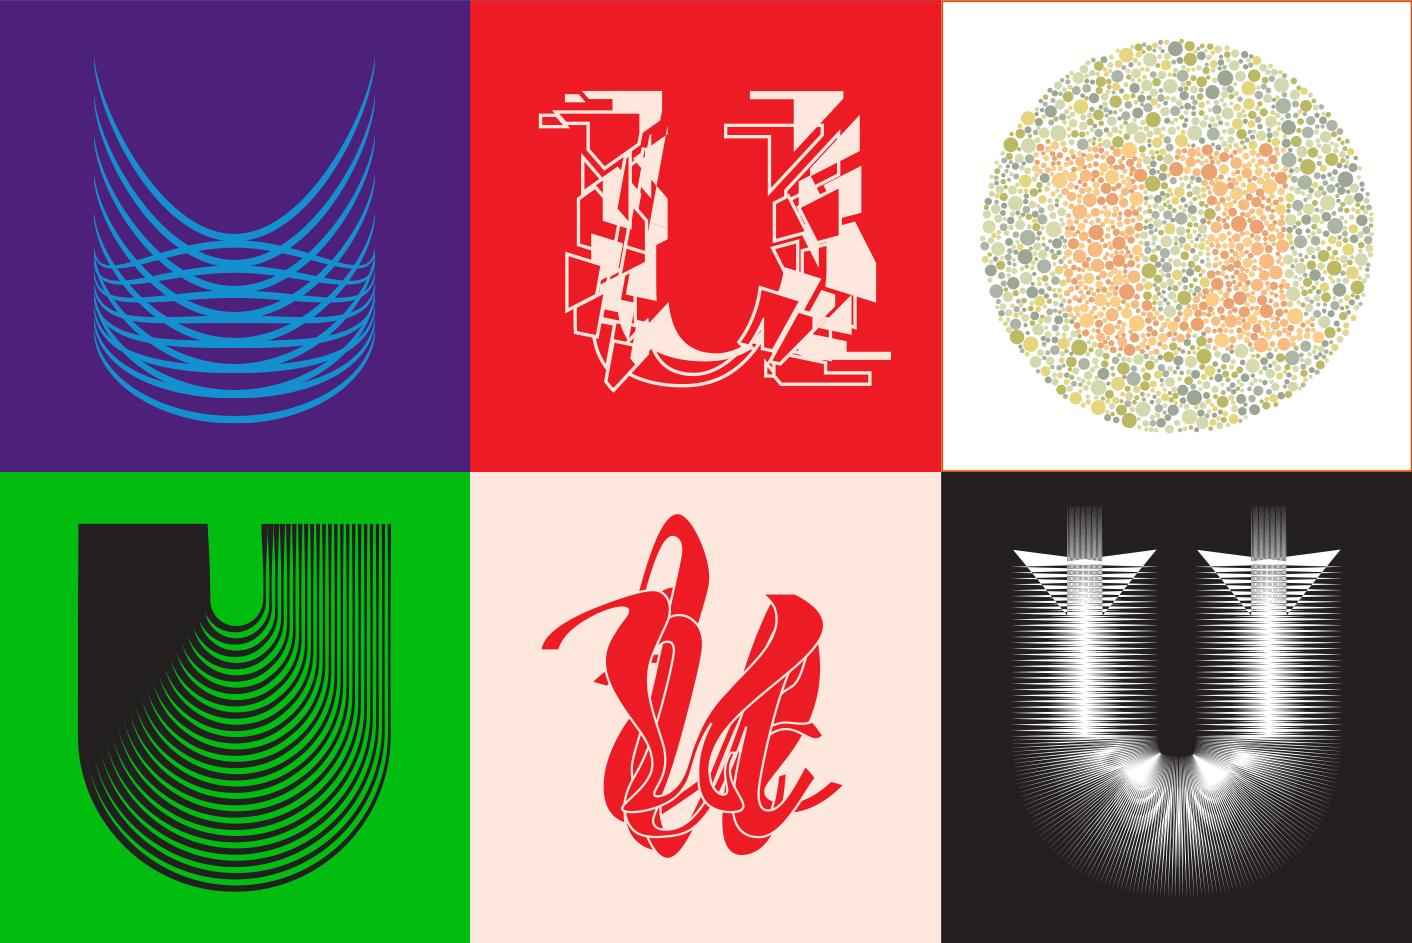 Explorations of abstract digital U-shaped graphics.